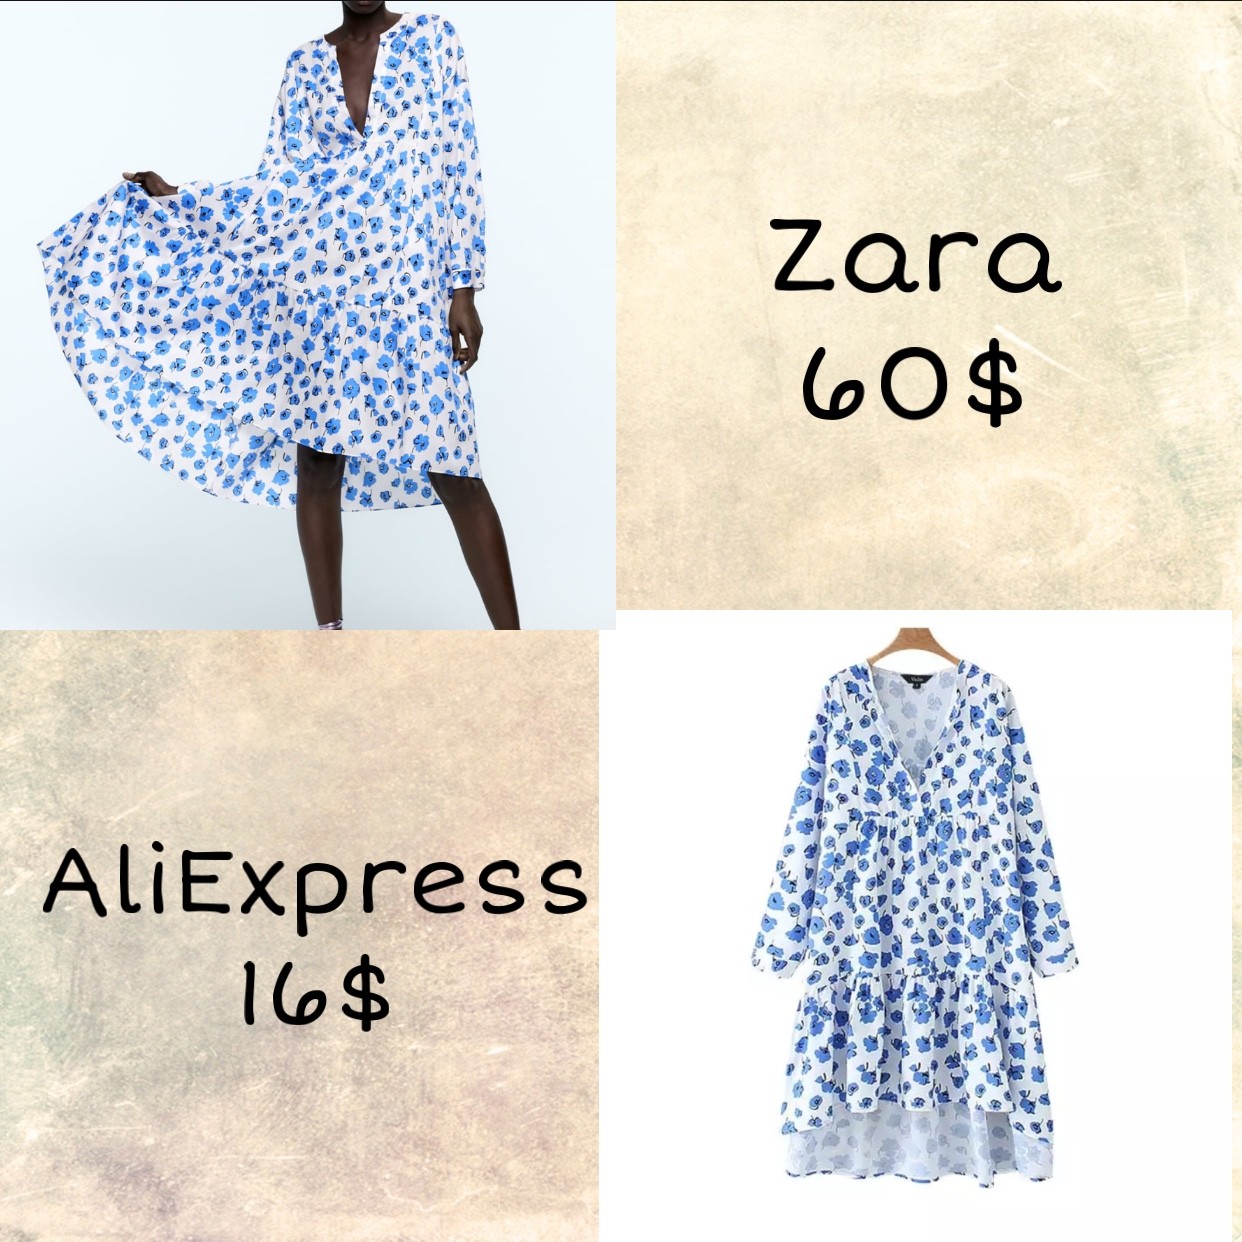 Zara /AliExpress — Teletype